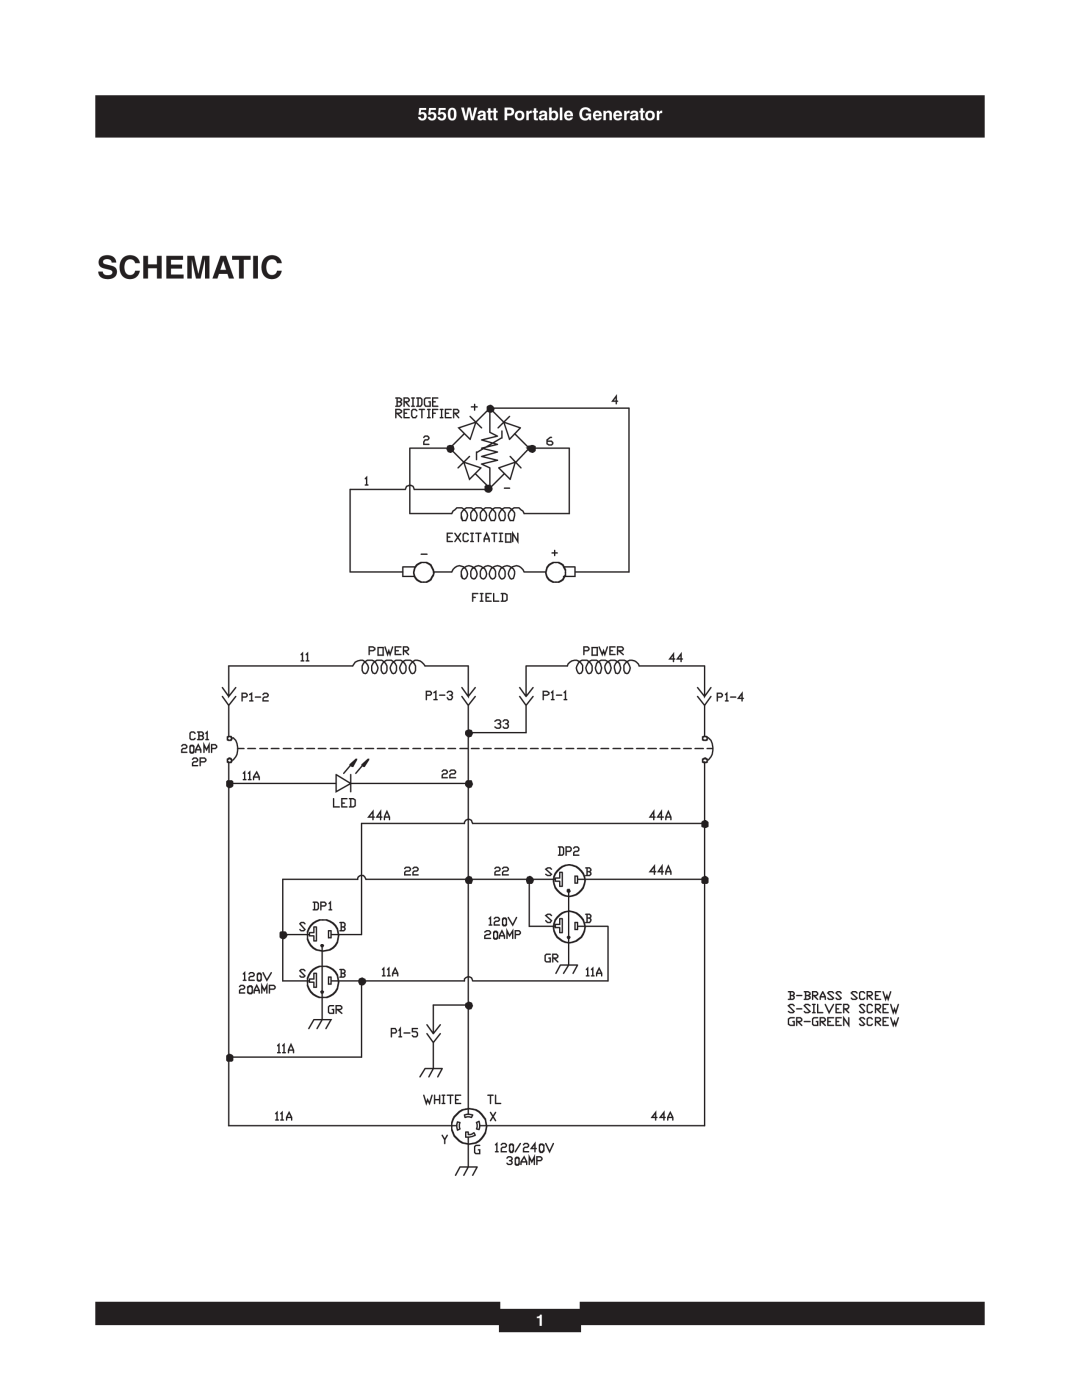 Briggs & Stratton 030325 manual Schematic, Watt Portable Generator 